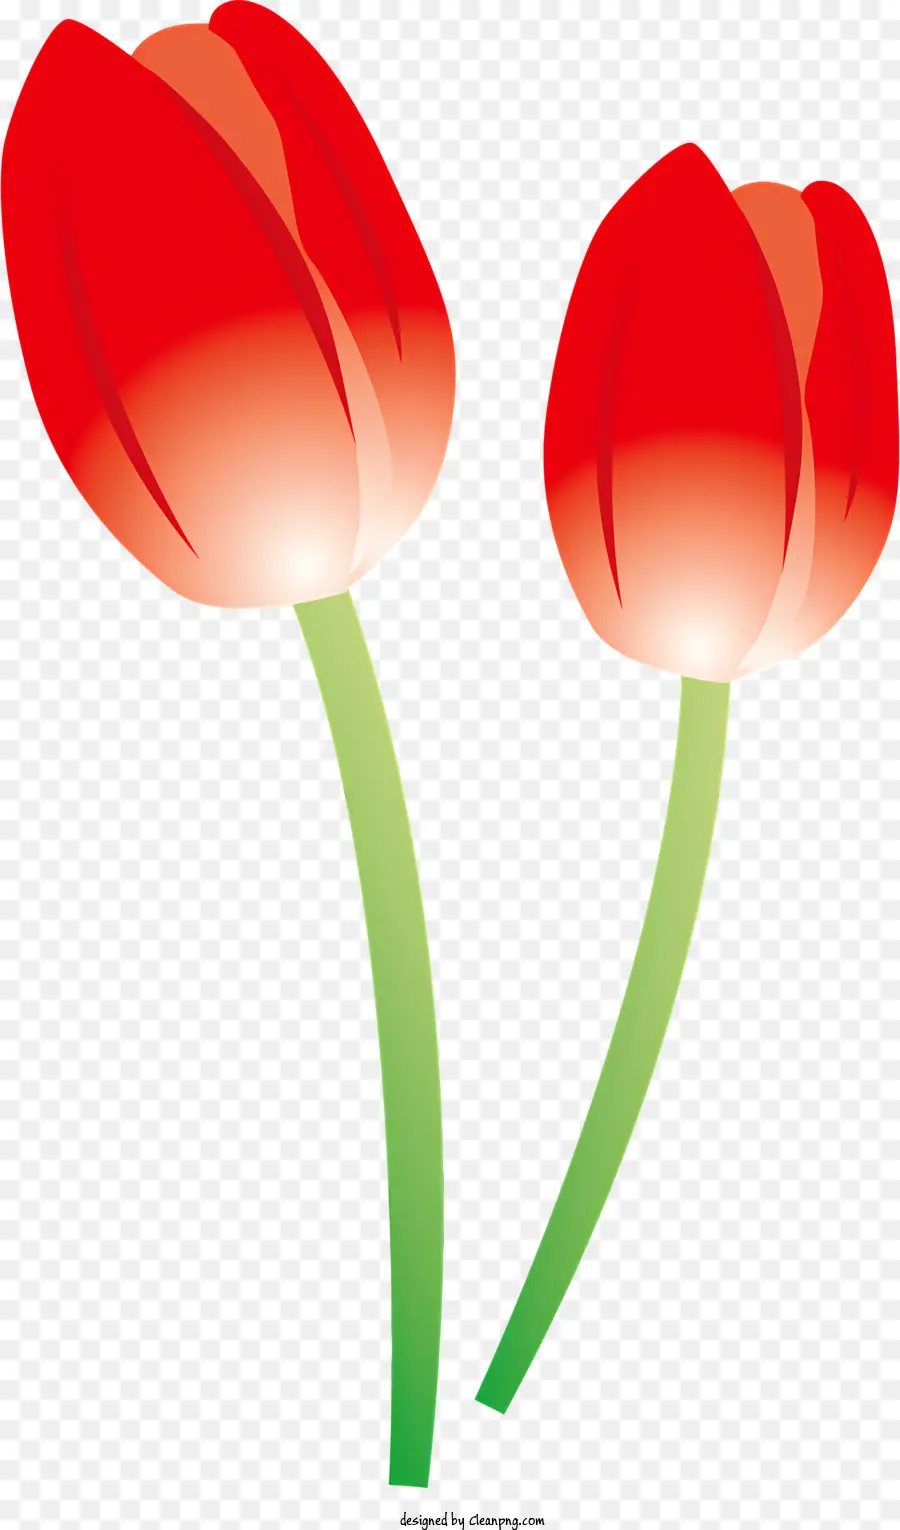 icon red tulips green leaves single stem symmetrical arrangement